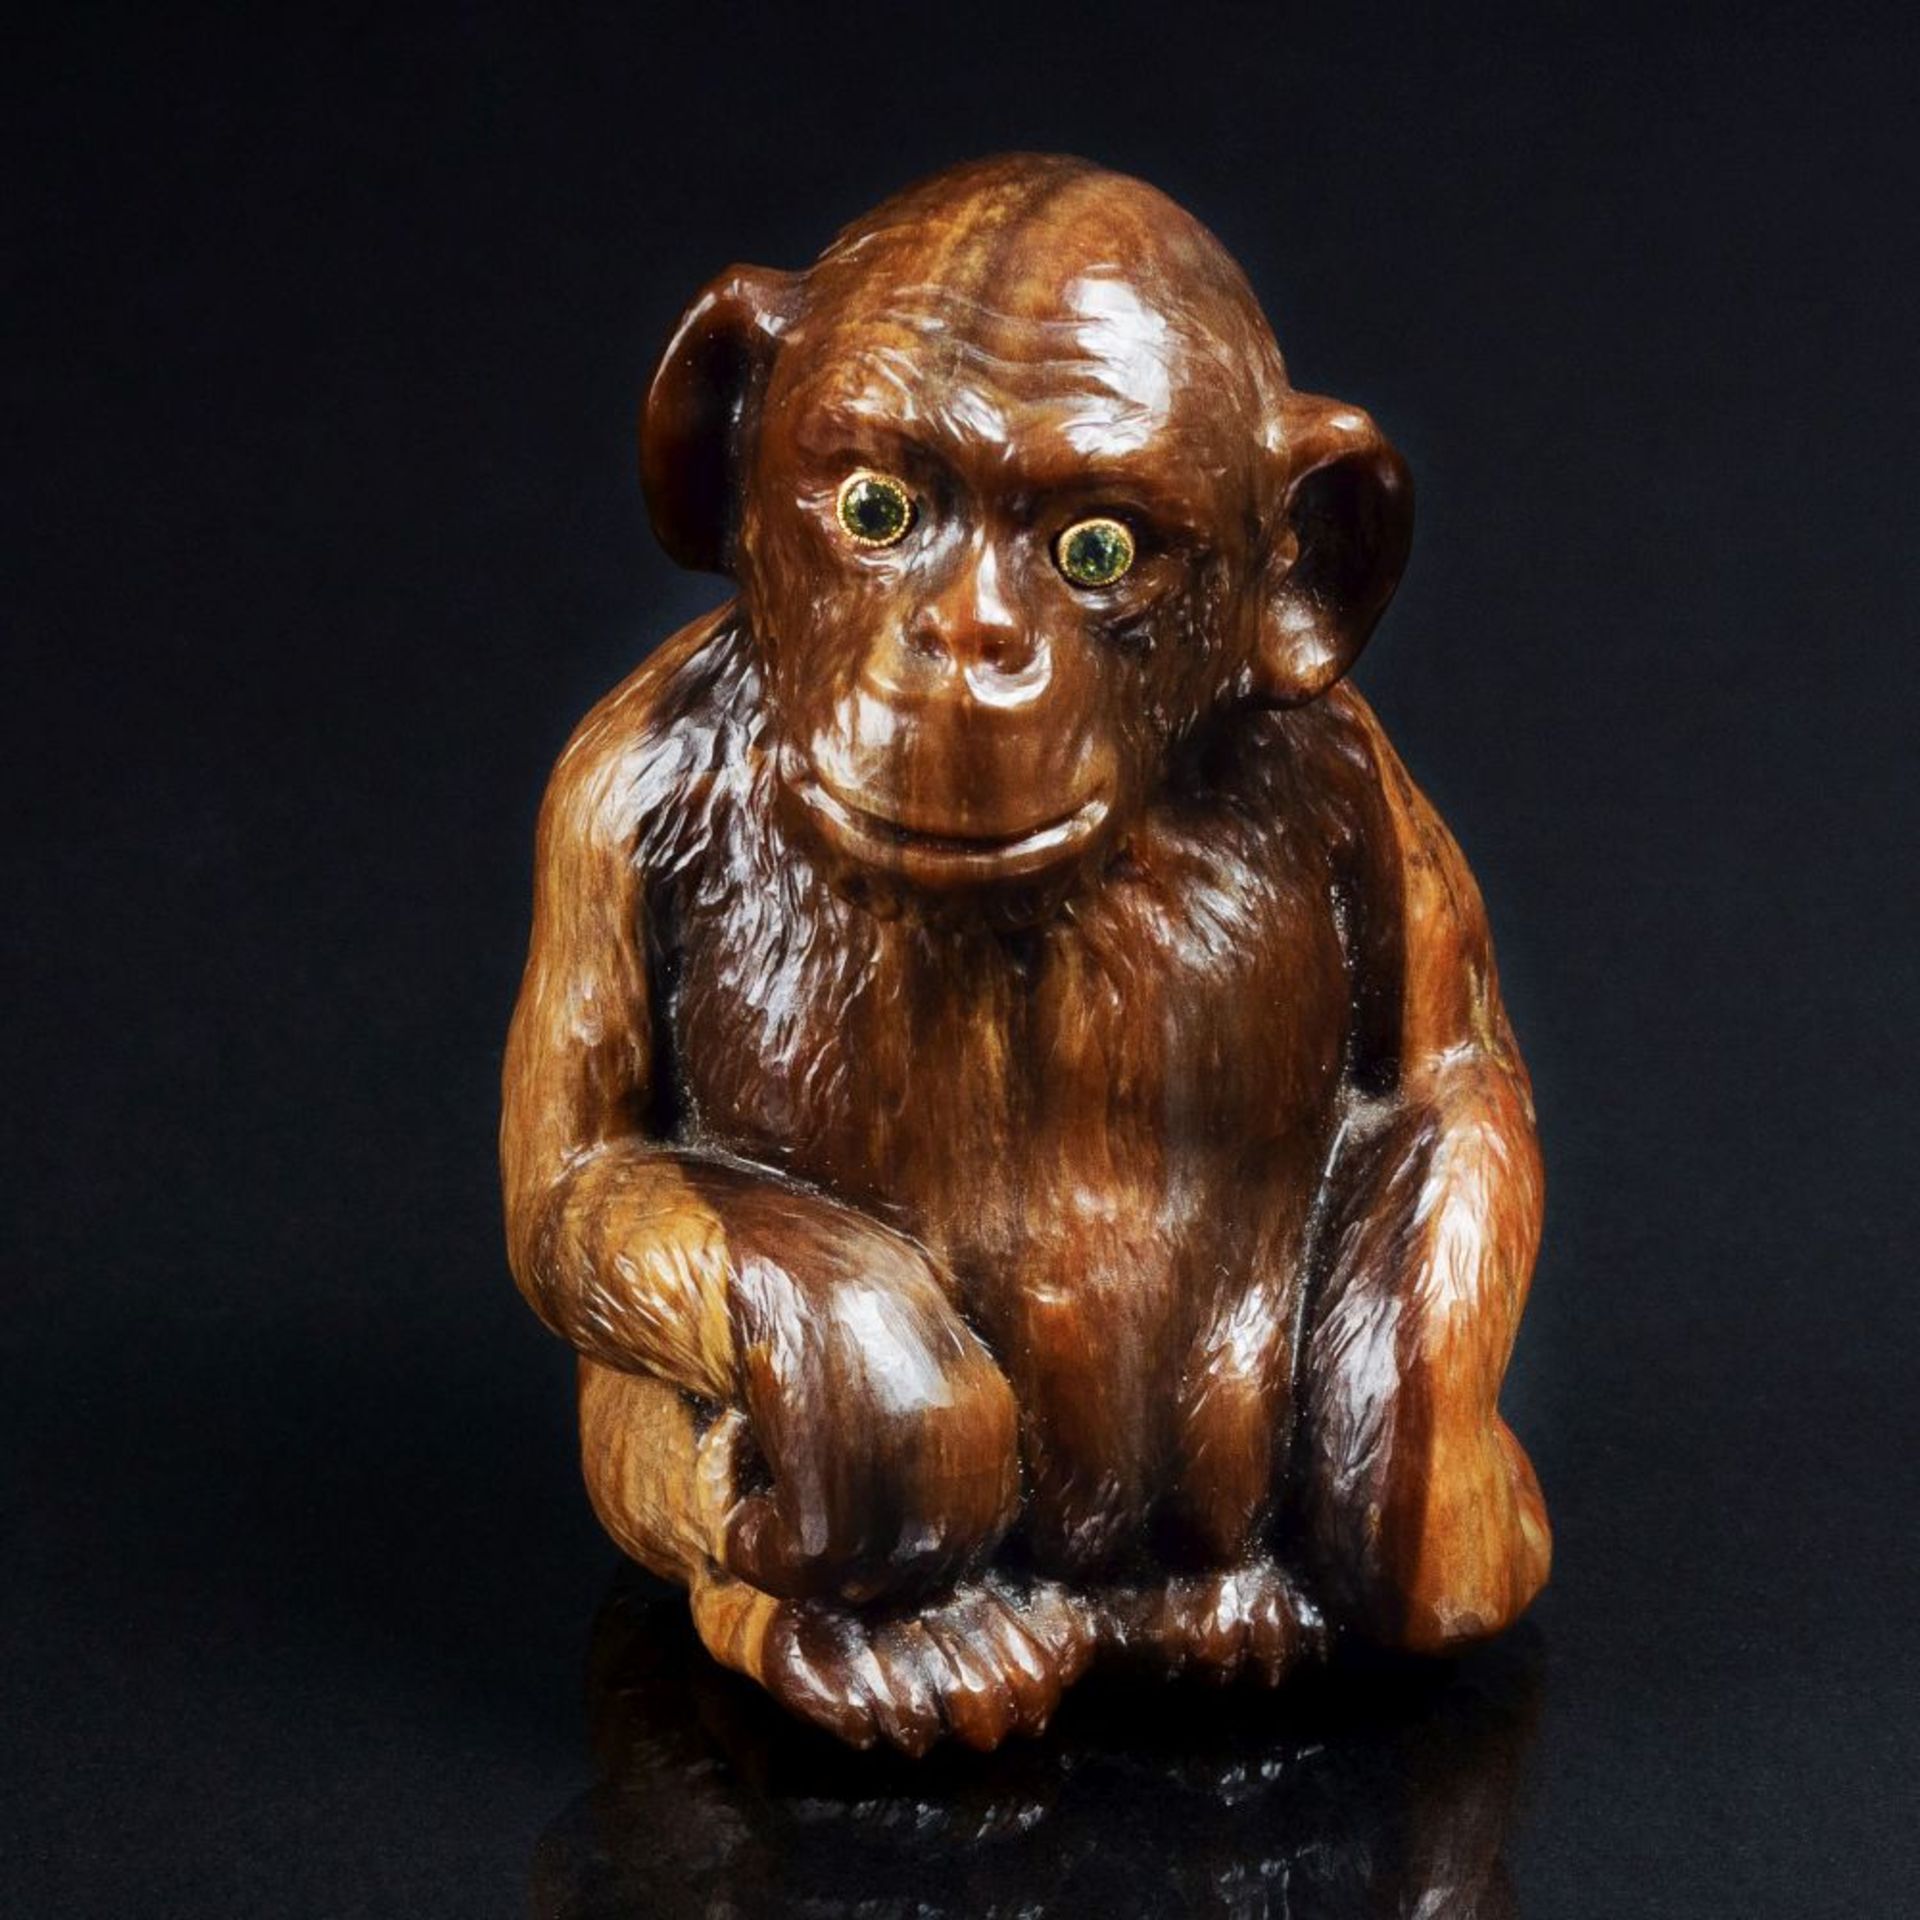 A Russian Agate Animal Figure 'Sitting Chimpanzee'.